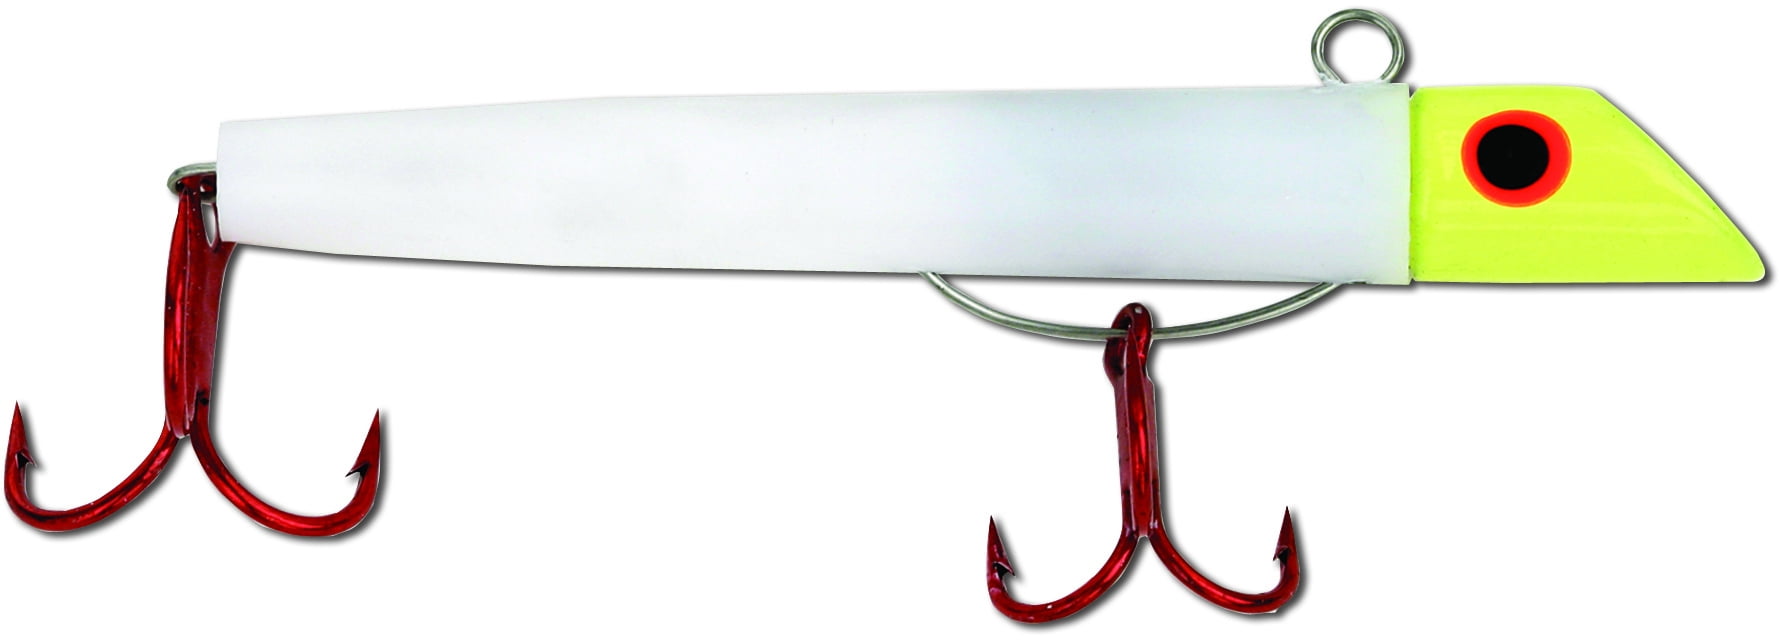 Sea Striker Got-Cha 100 Series Saltwater Fishing Plug Lure,  White/Yellow/Red, 1 Ounce 